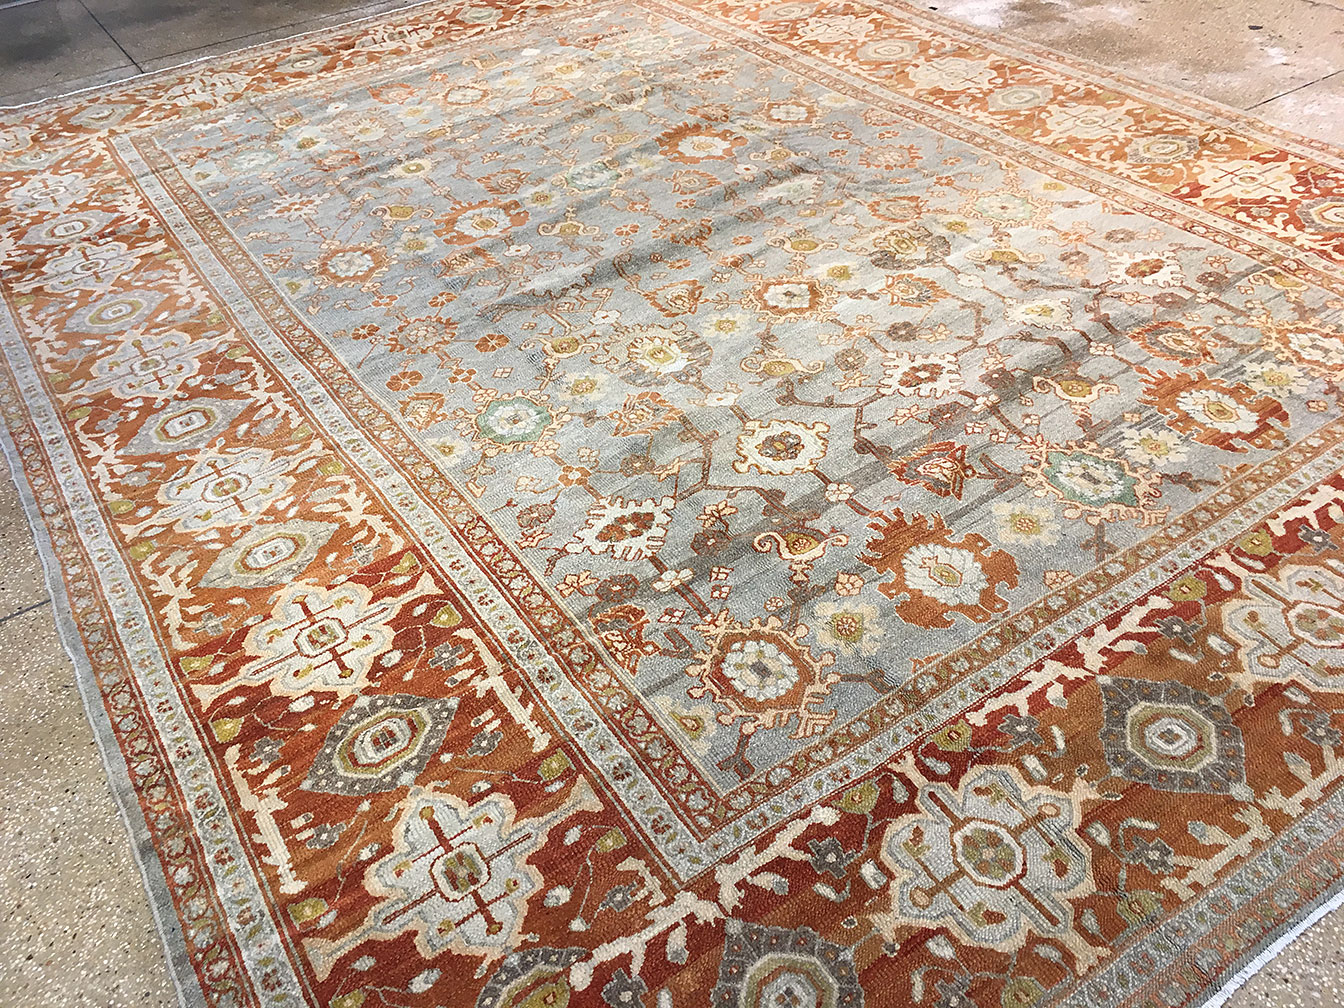 Antique bibi kabad Carpet - # 52341